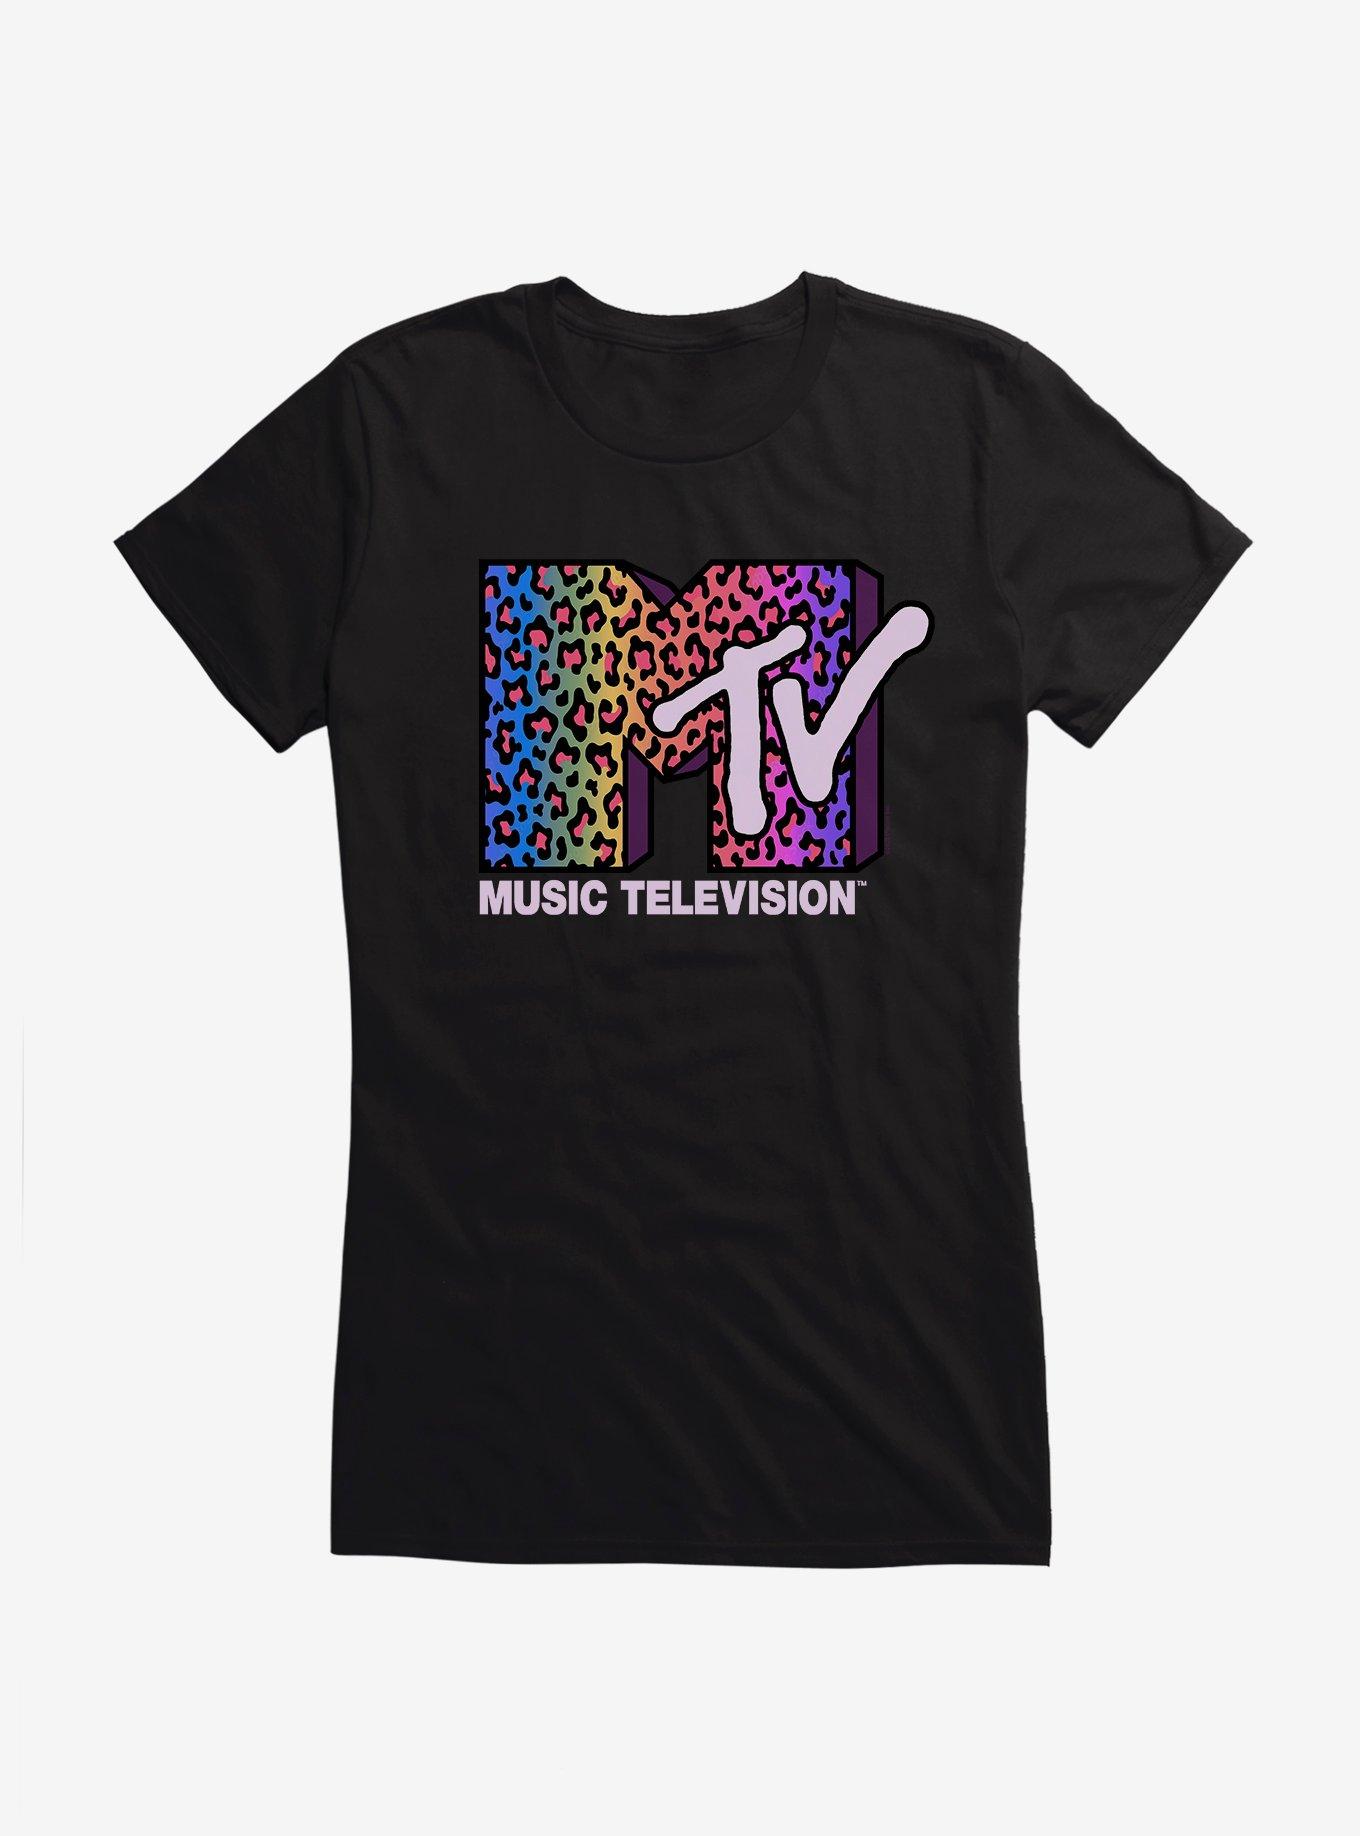 MTV Rainbow Cheetah Logo Girls T-Shirt